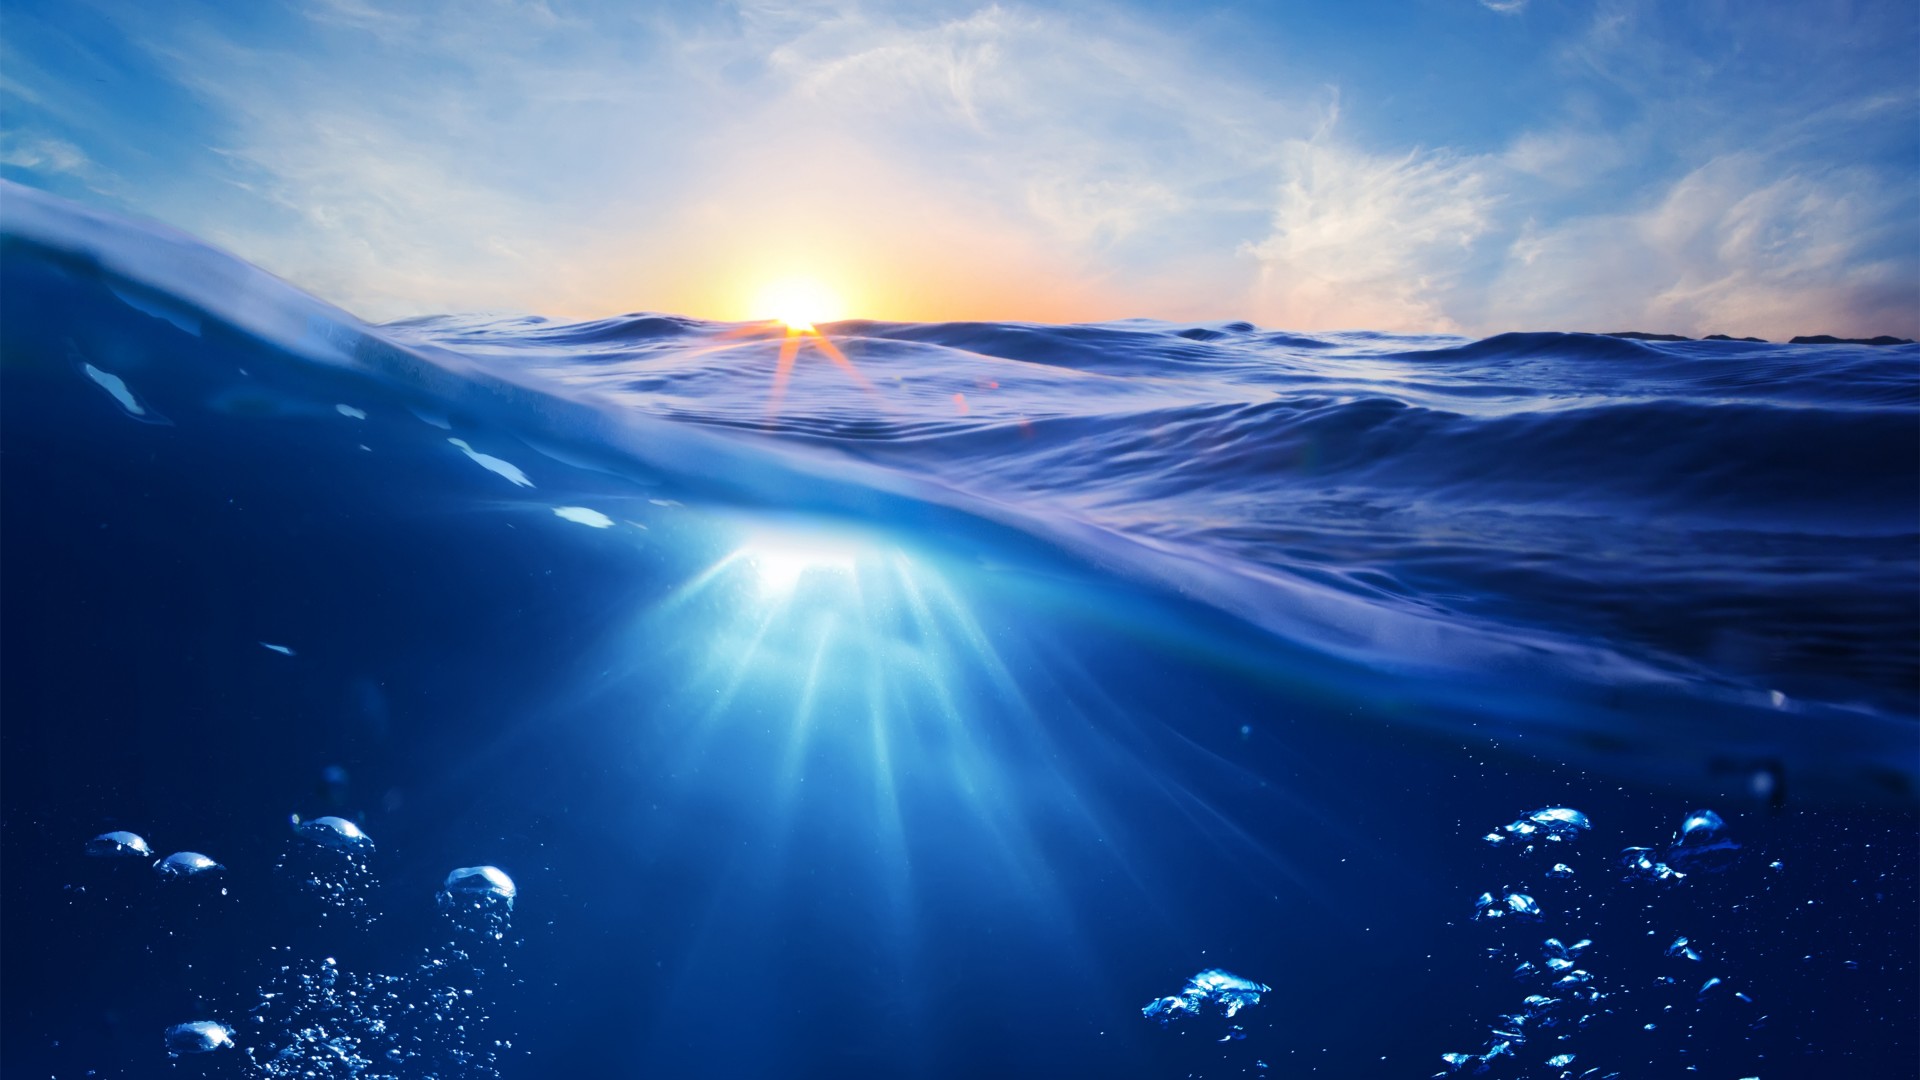 Ocean, 5k, 4k wallpaper, 8k, Sea, nature, underwater, water, sun, sky, blue, rays (horizontal)